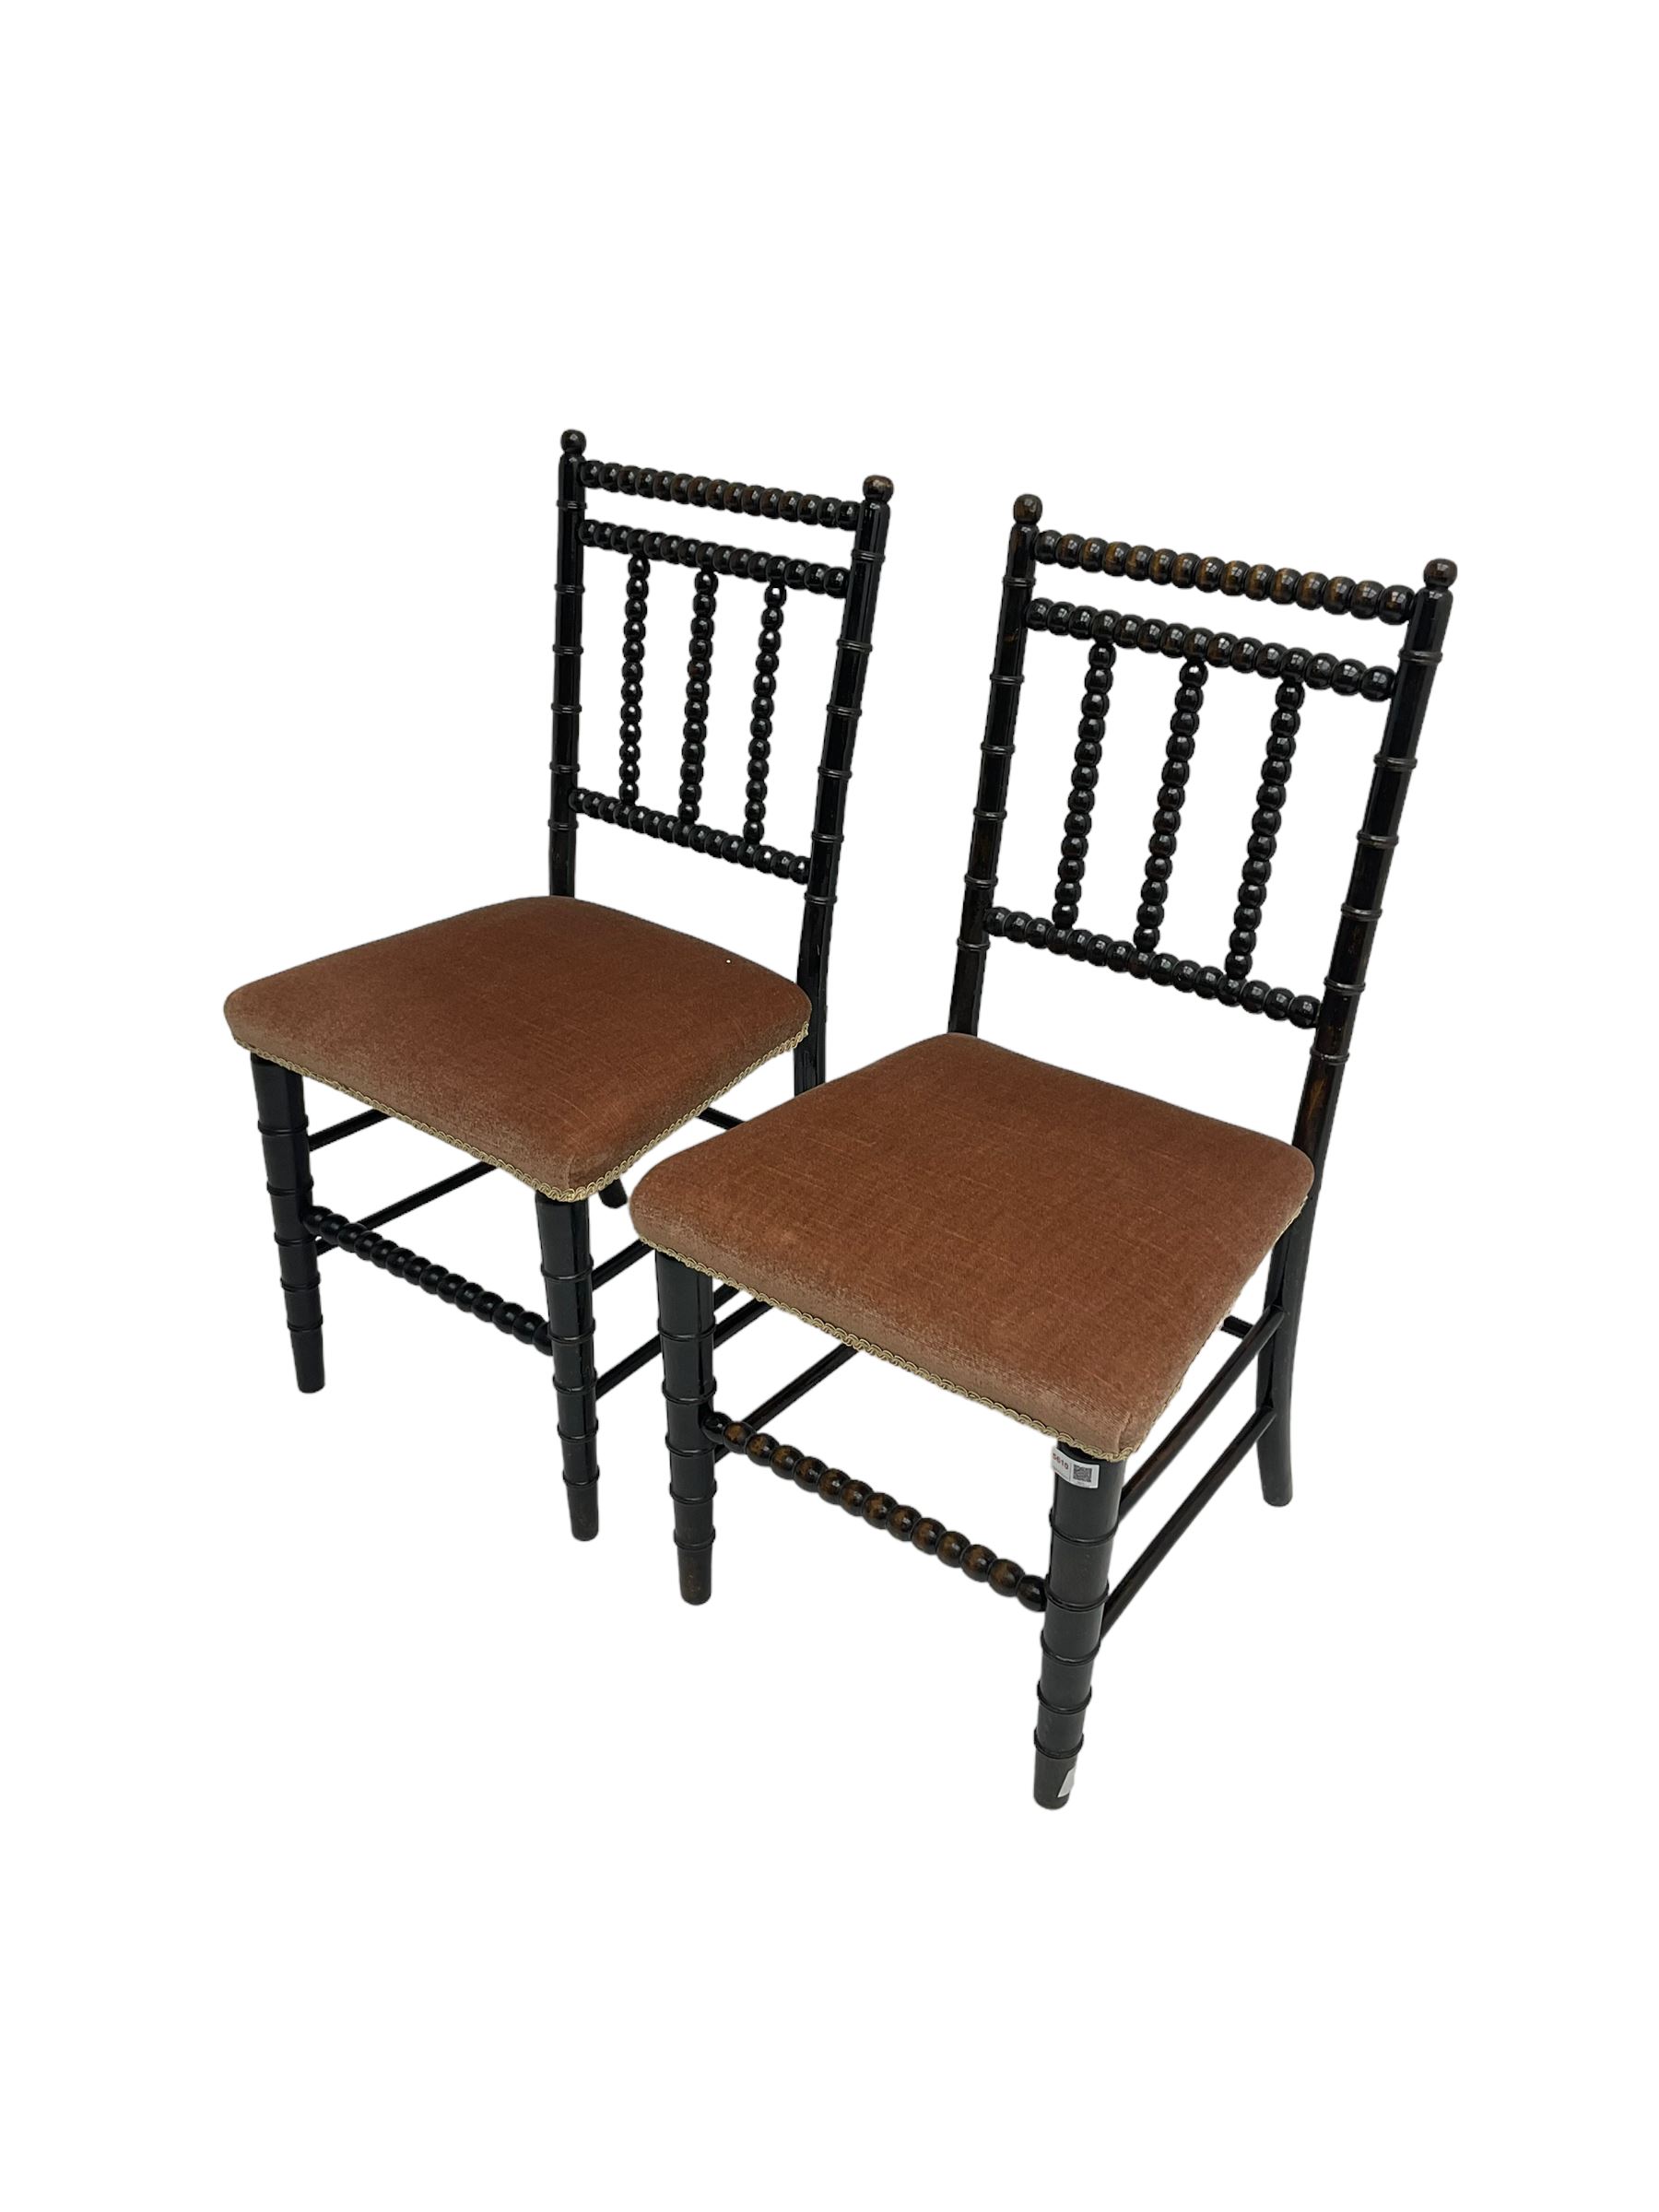 Pair Edwardian bobbin turned chairs - Image 2 of 2